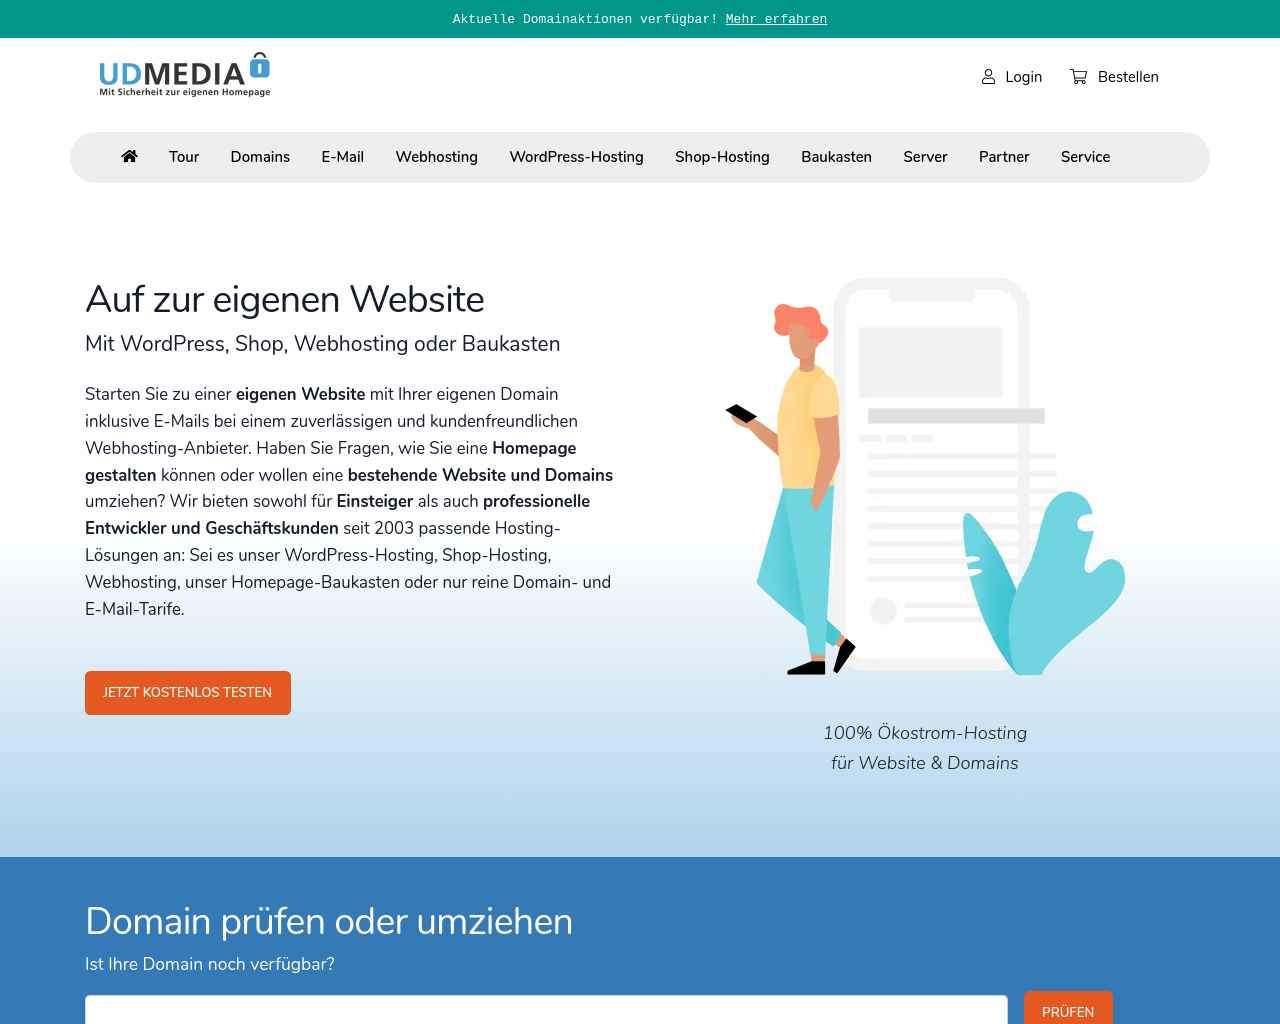 udmedia.de